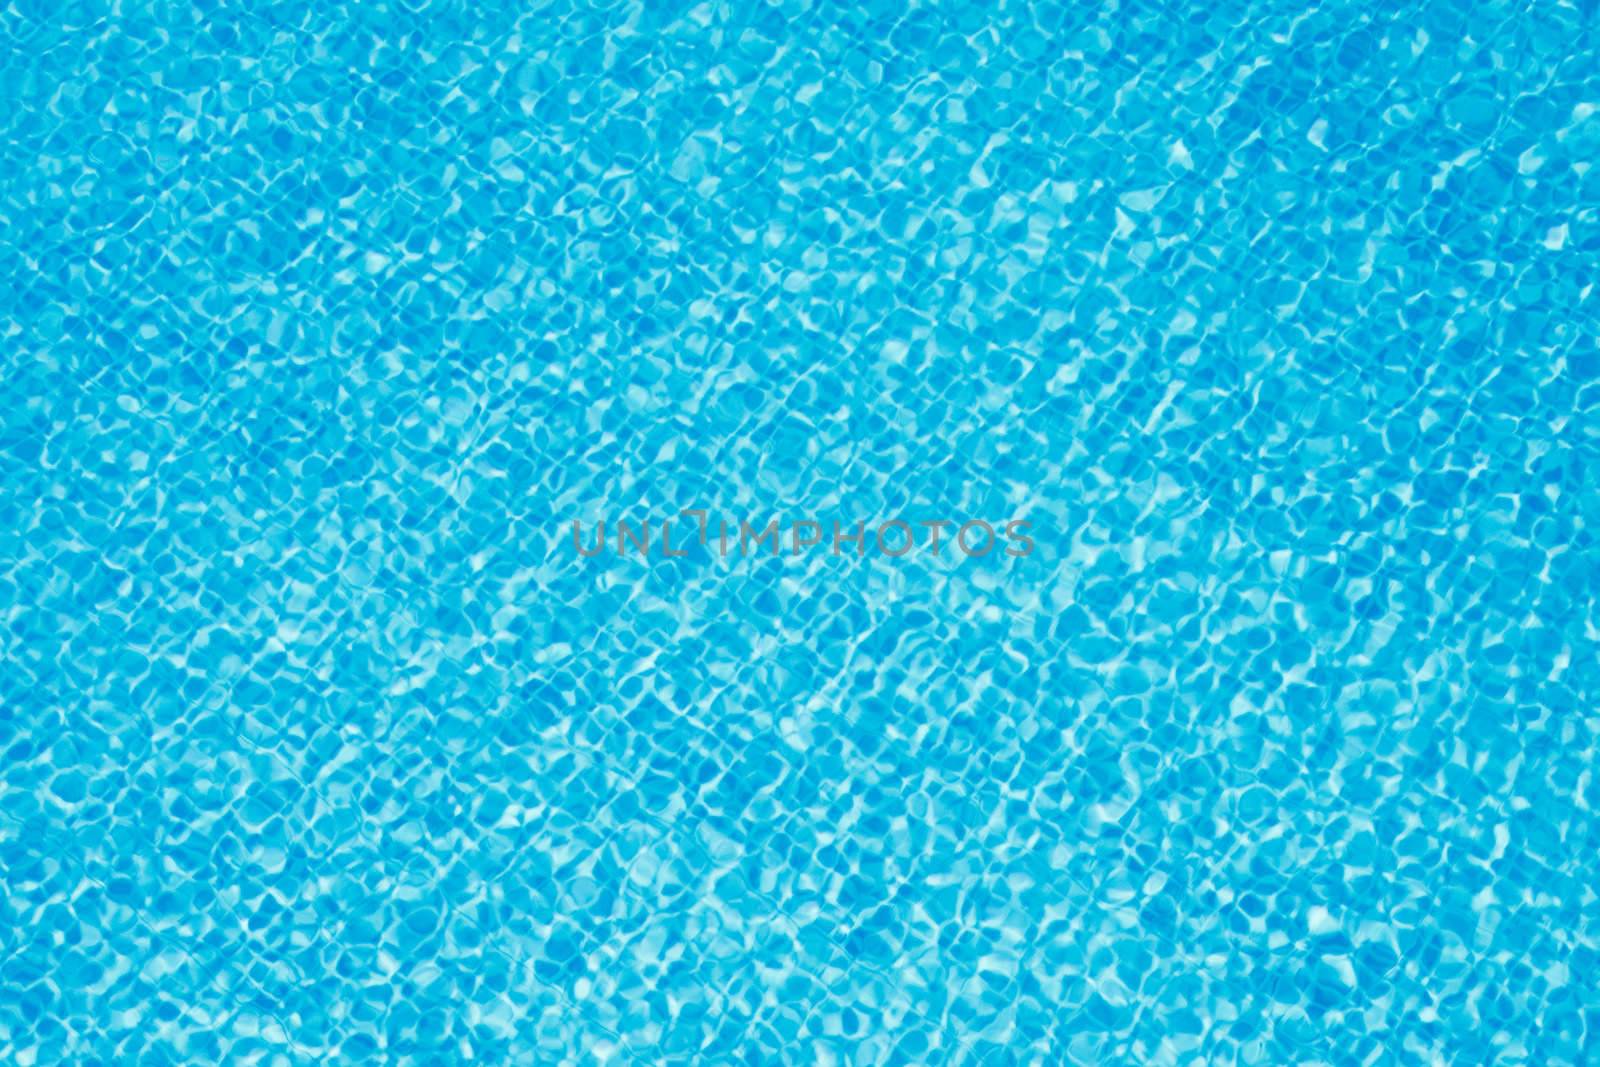 Clean water in pool by dimol